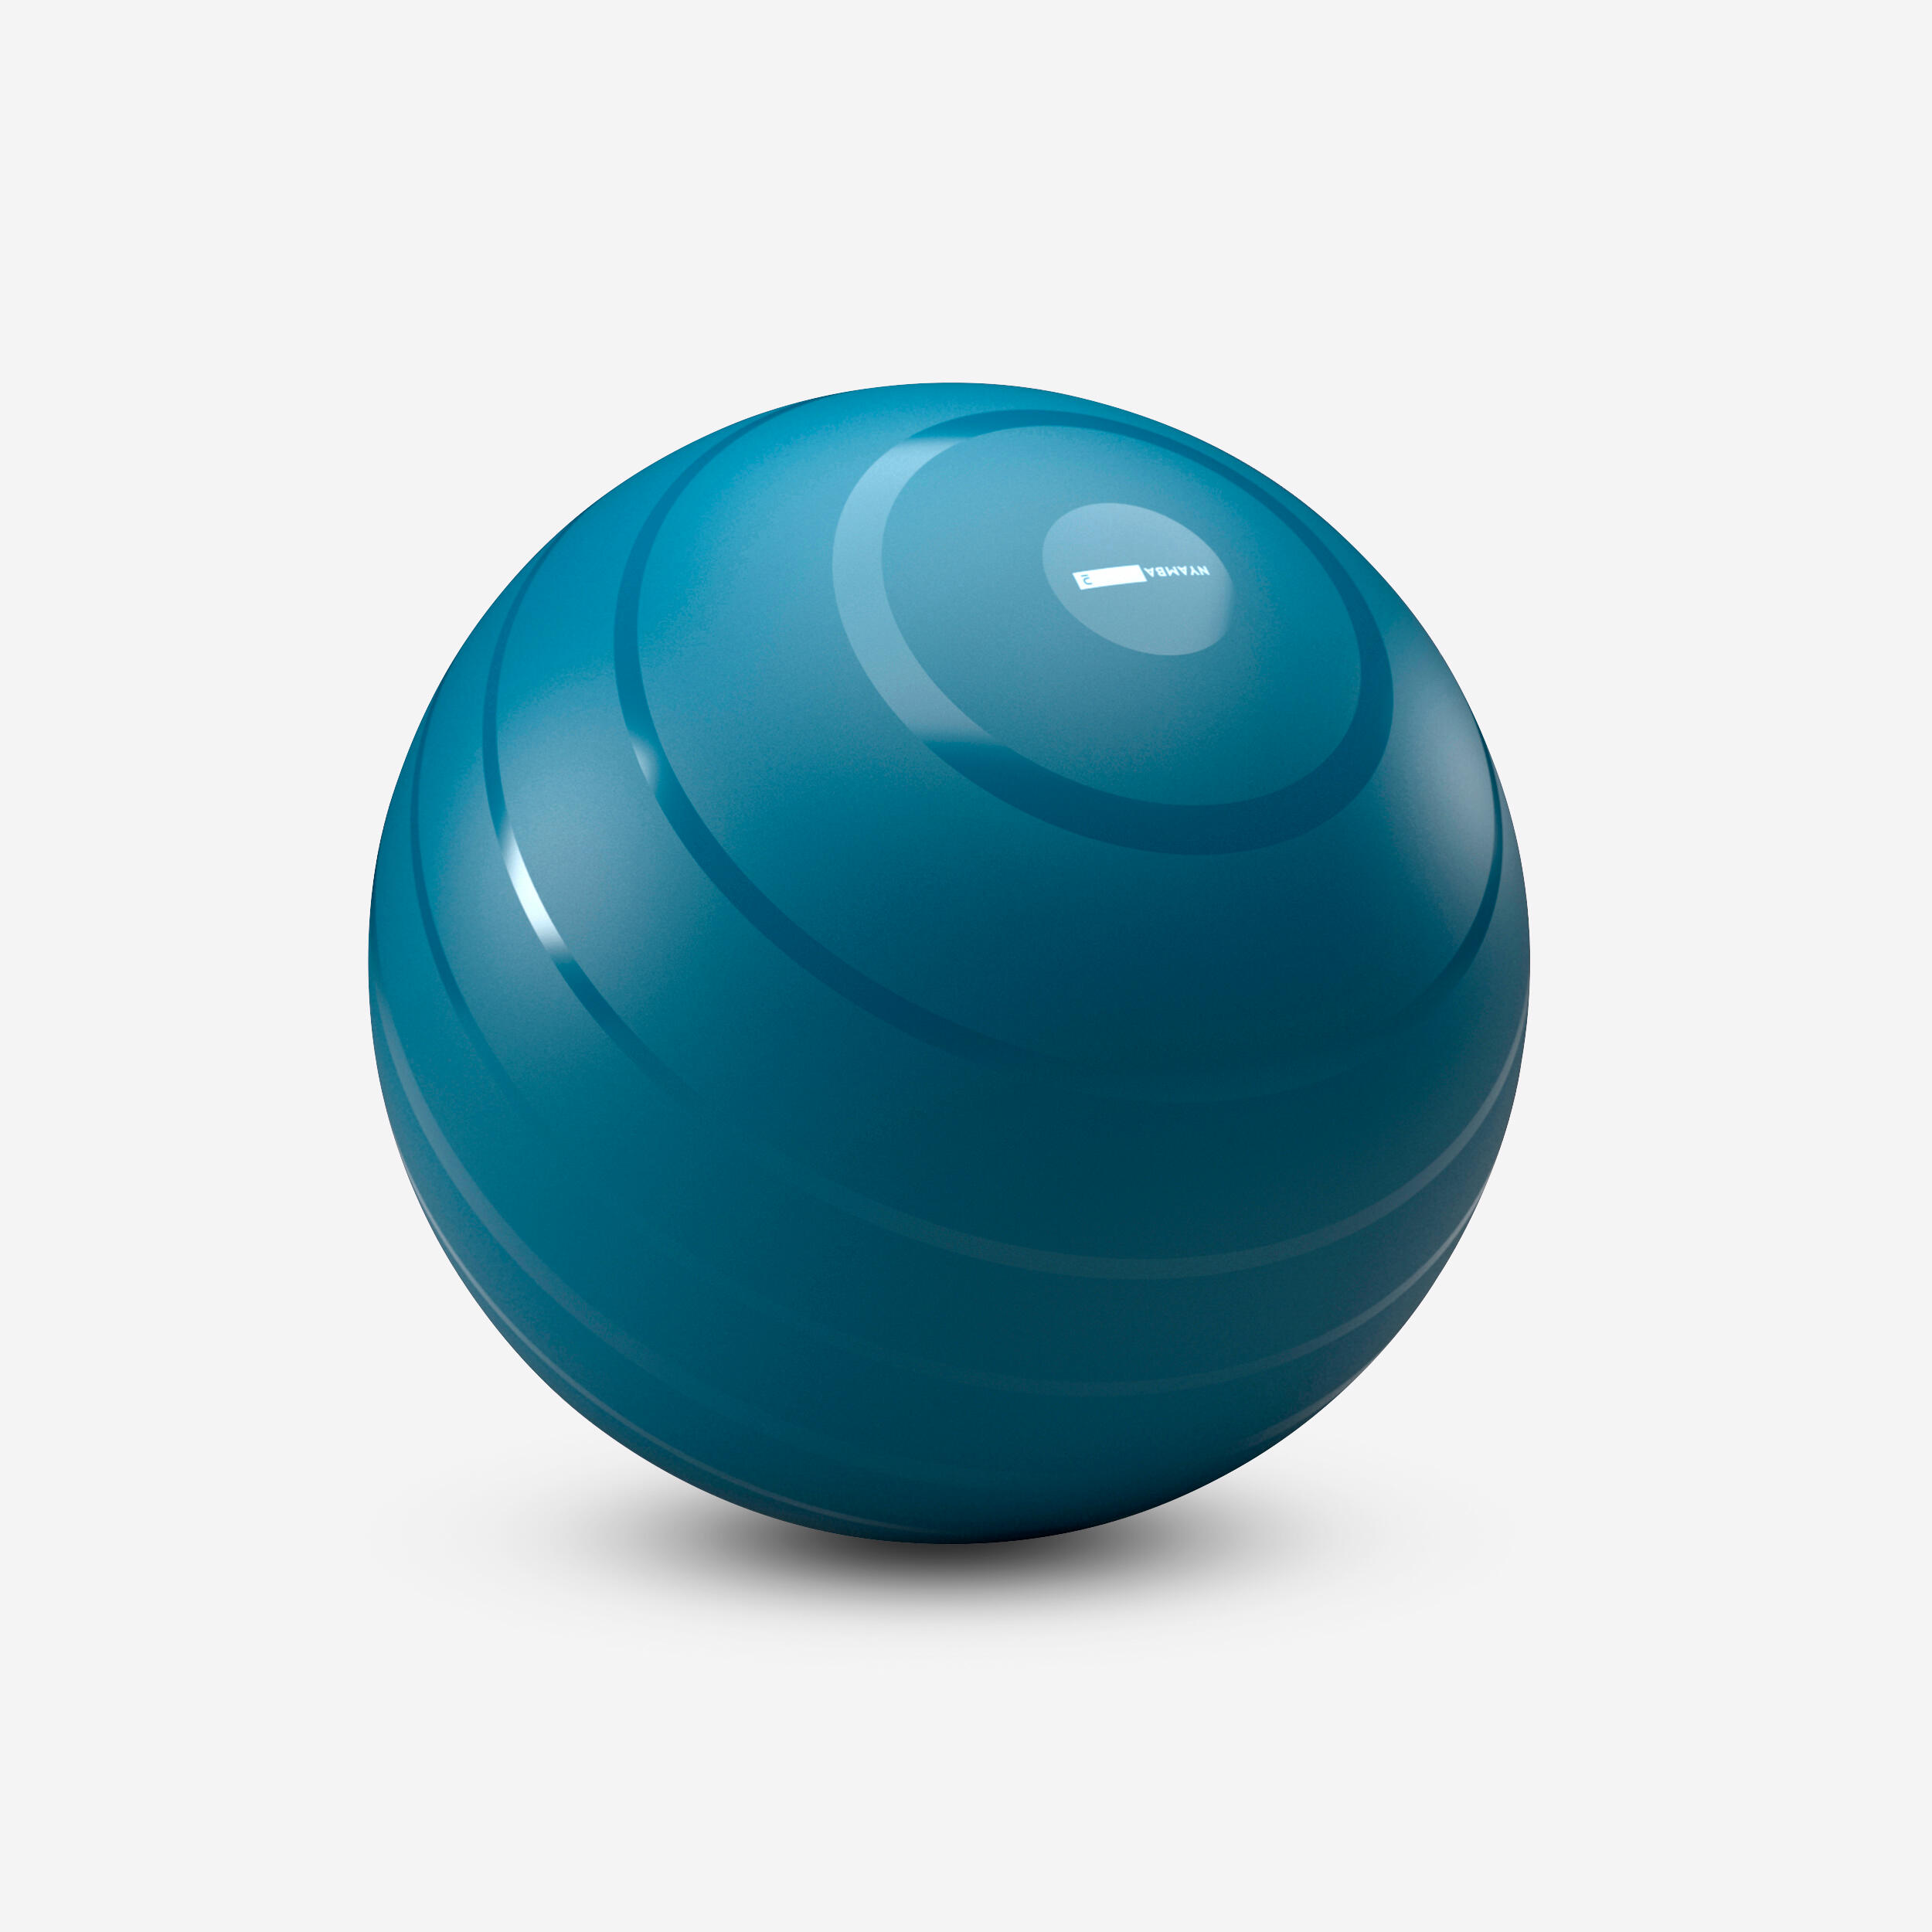 Size 1 / 55 cm robust Swiss Ball - Blue 1/3